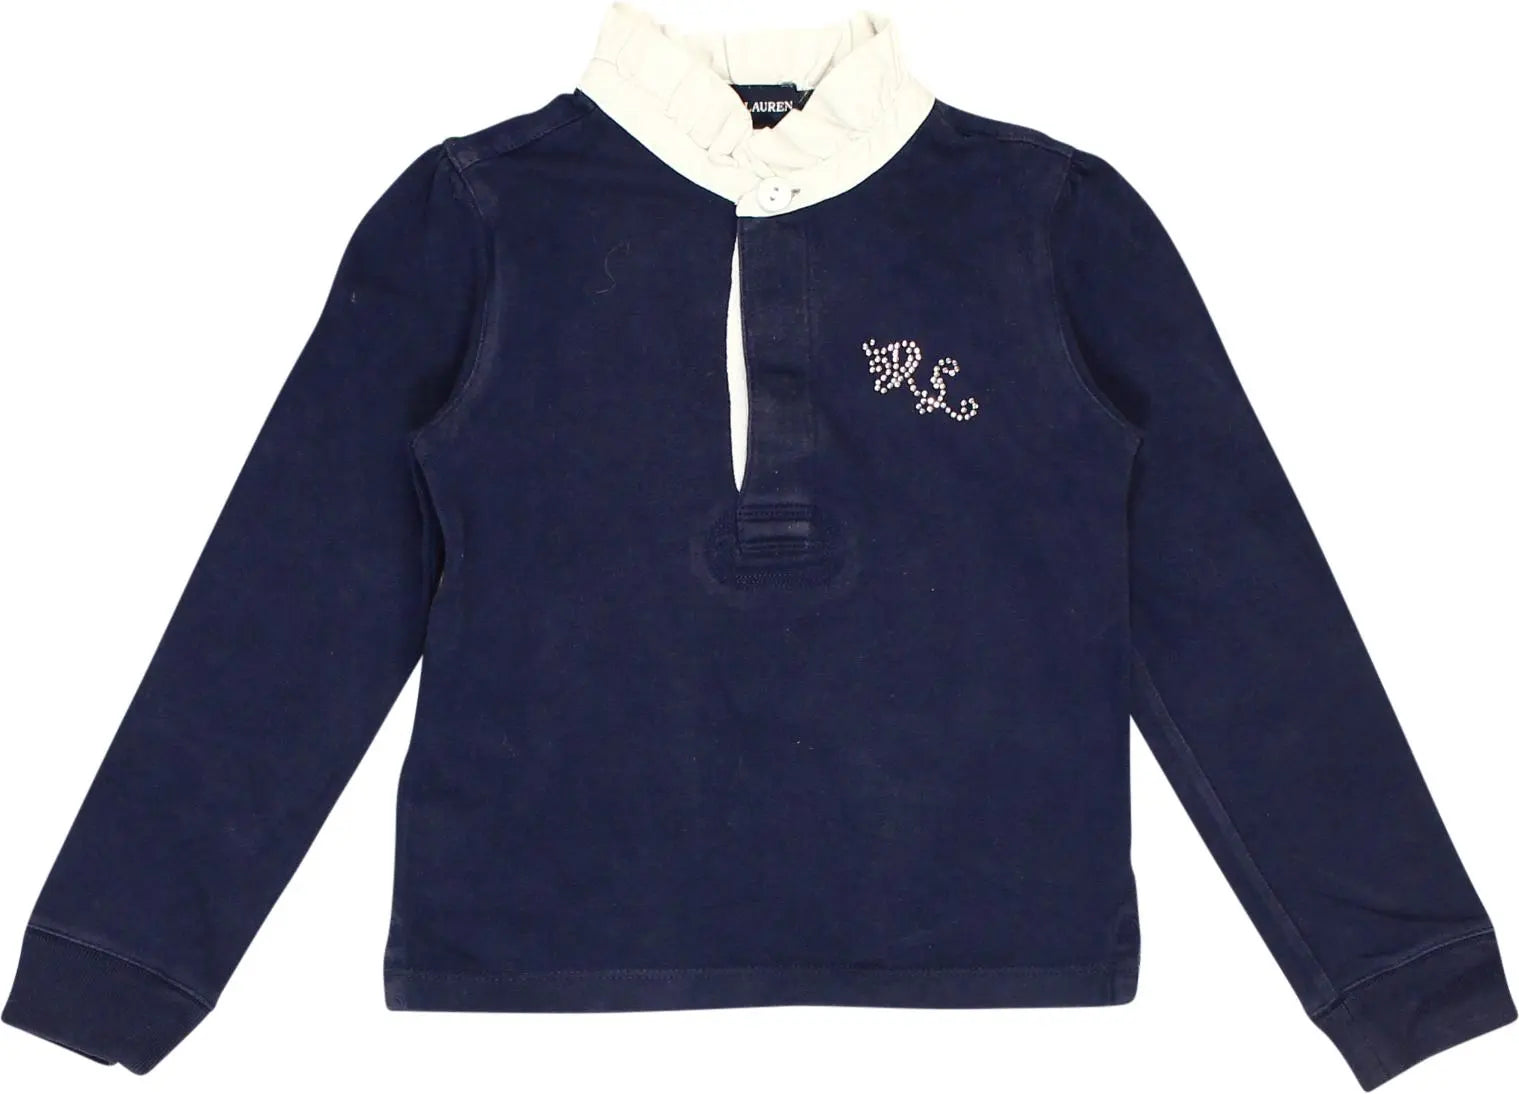 Ralph Lauren - Sweater by Ralph Lauren- ThriftTale.com - Vintage and second handclothing